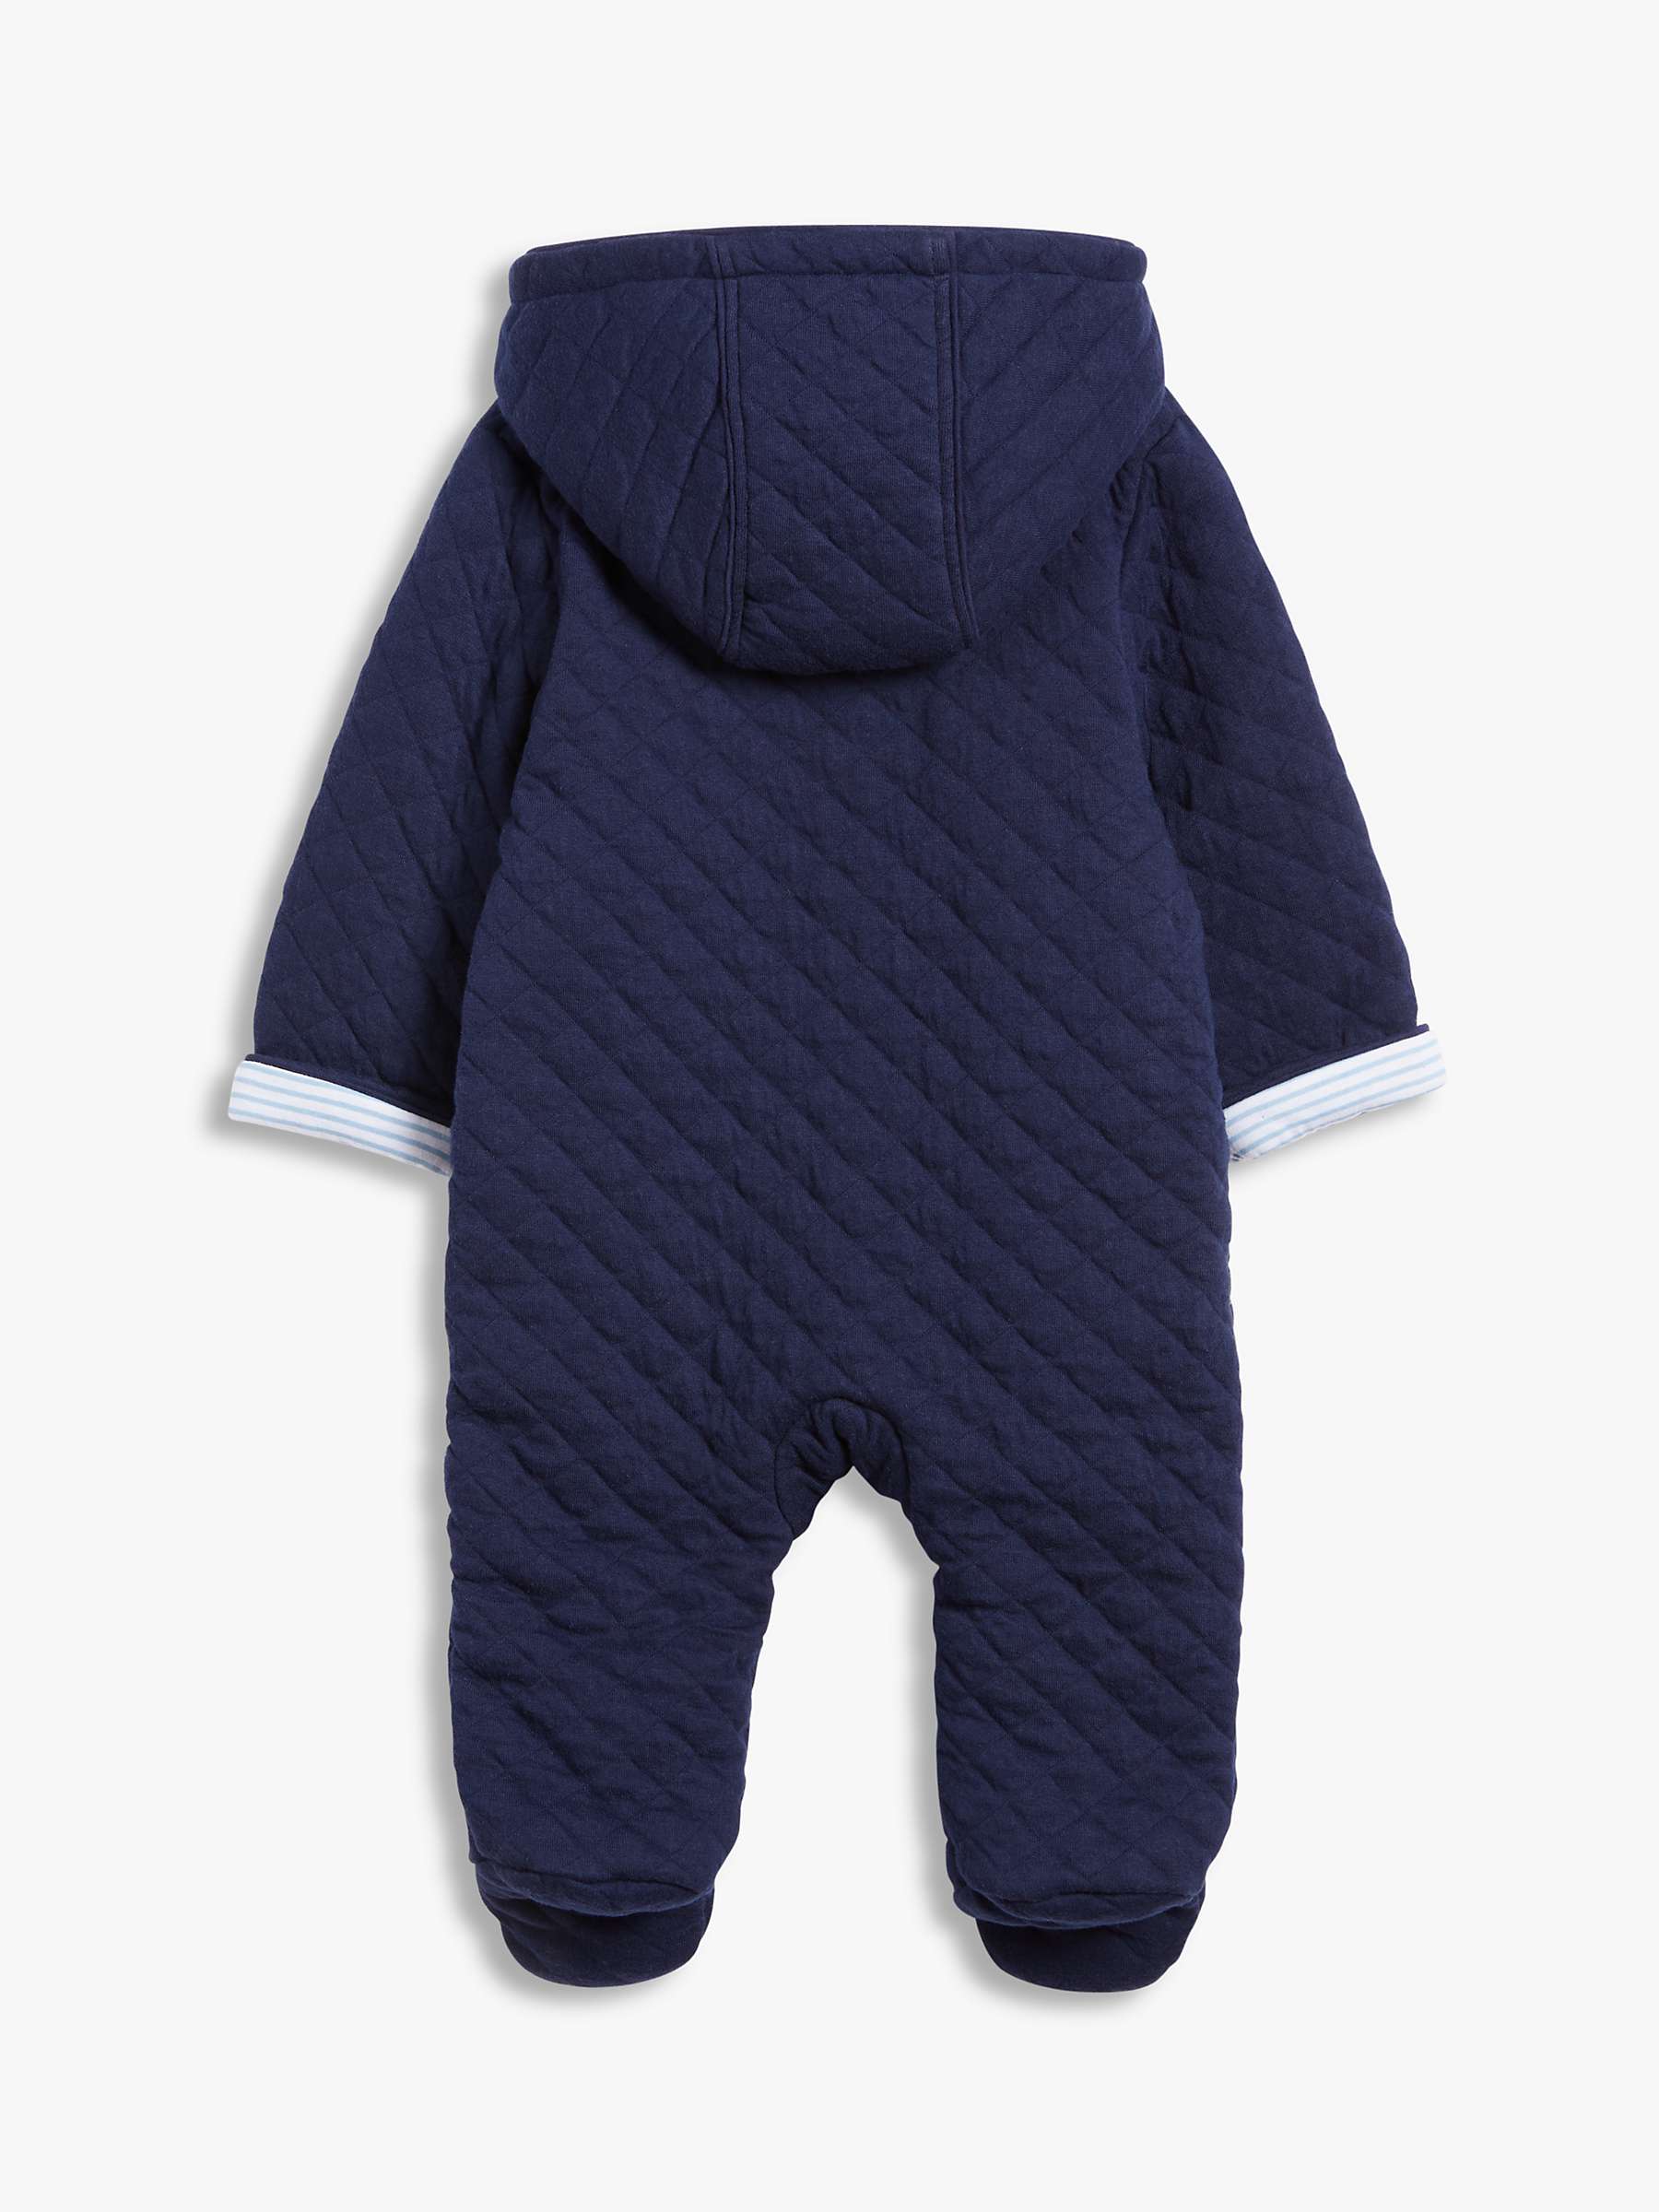 Buy John Lewis Baby Quilt Wadded Pramsuit Online at johnlewis.com